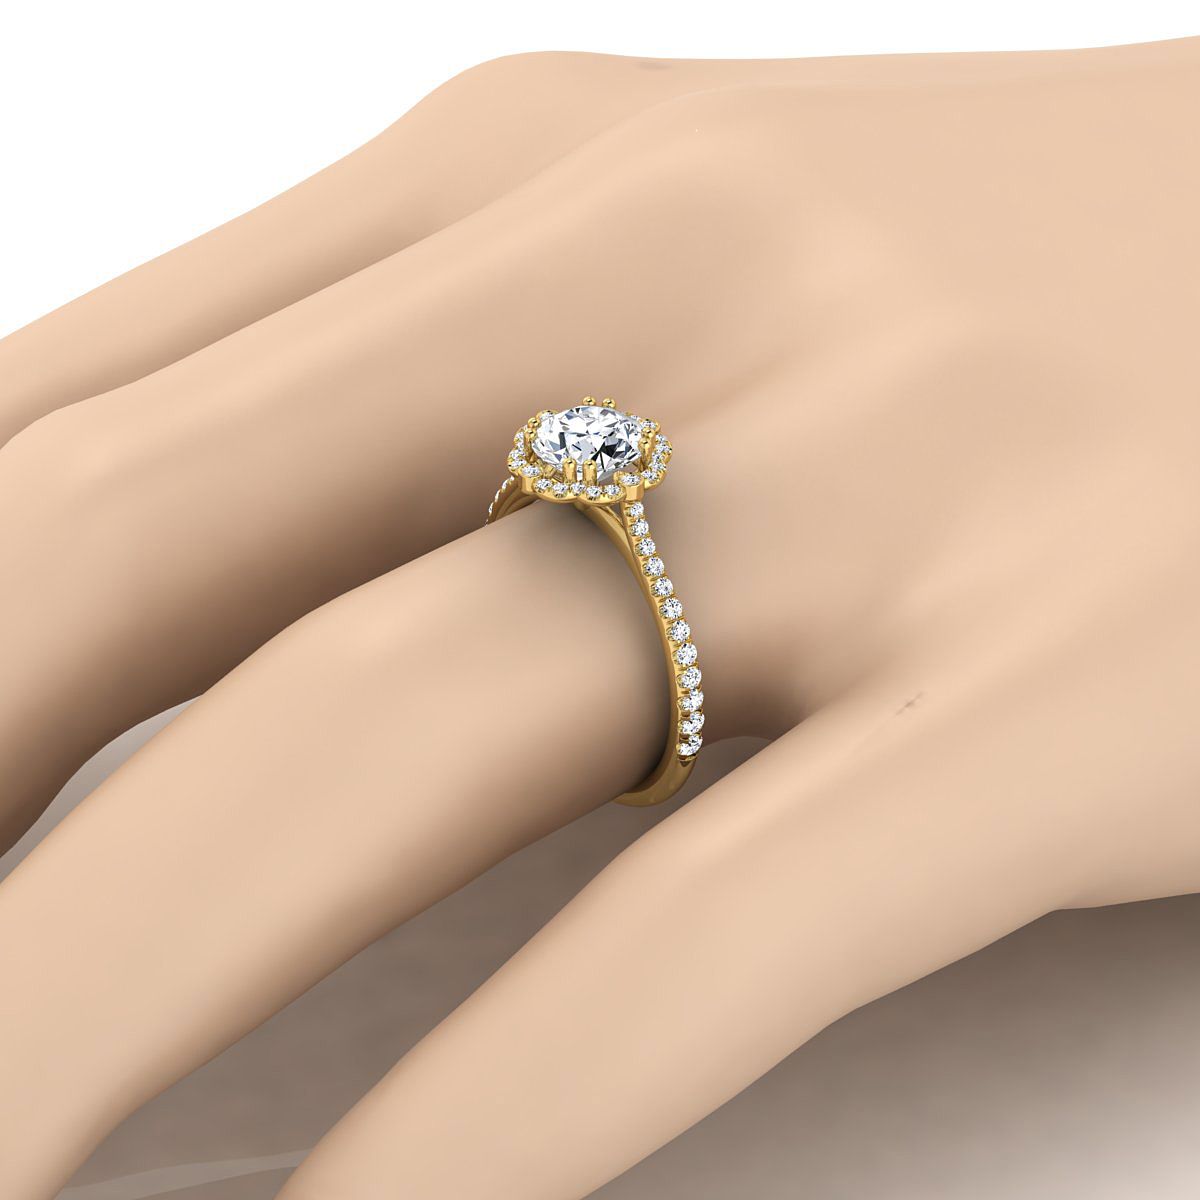 18K Yellow Gold Round Brilliant Garnet Ornate Diamond Halo Vintage Inspired Engagement Ring -1/4ctw